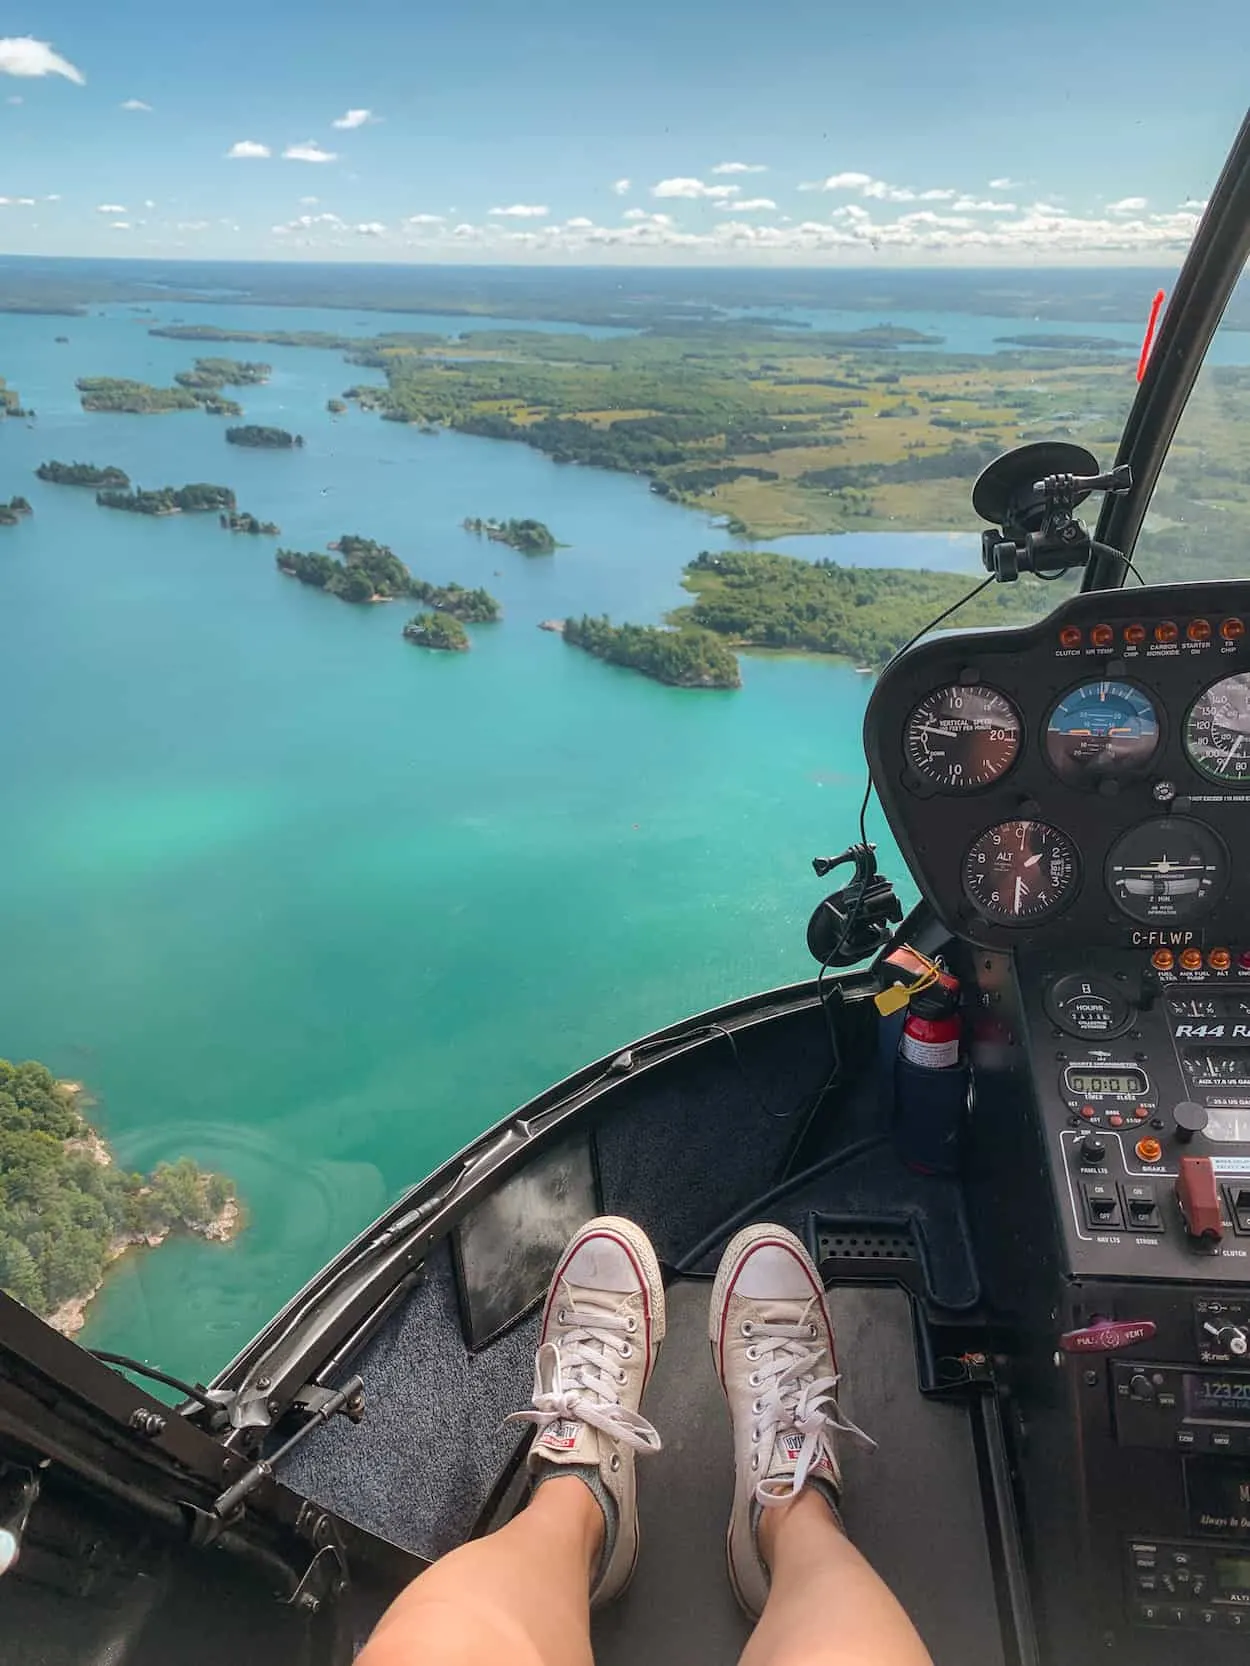 1000 Islands Helicopter Tours in Gananoque, Ontario